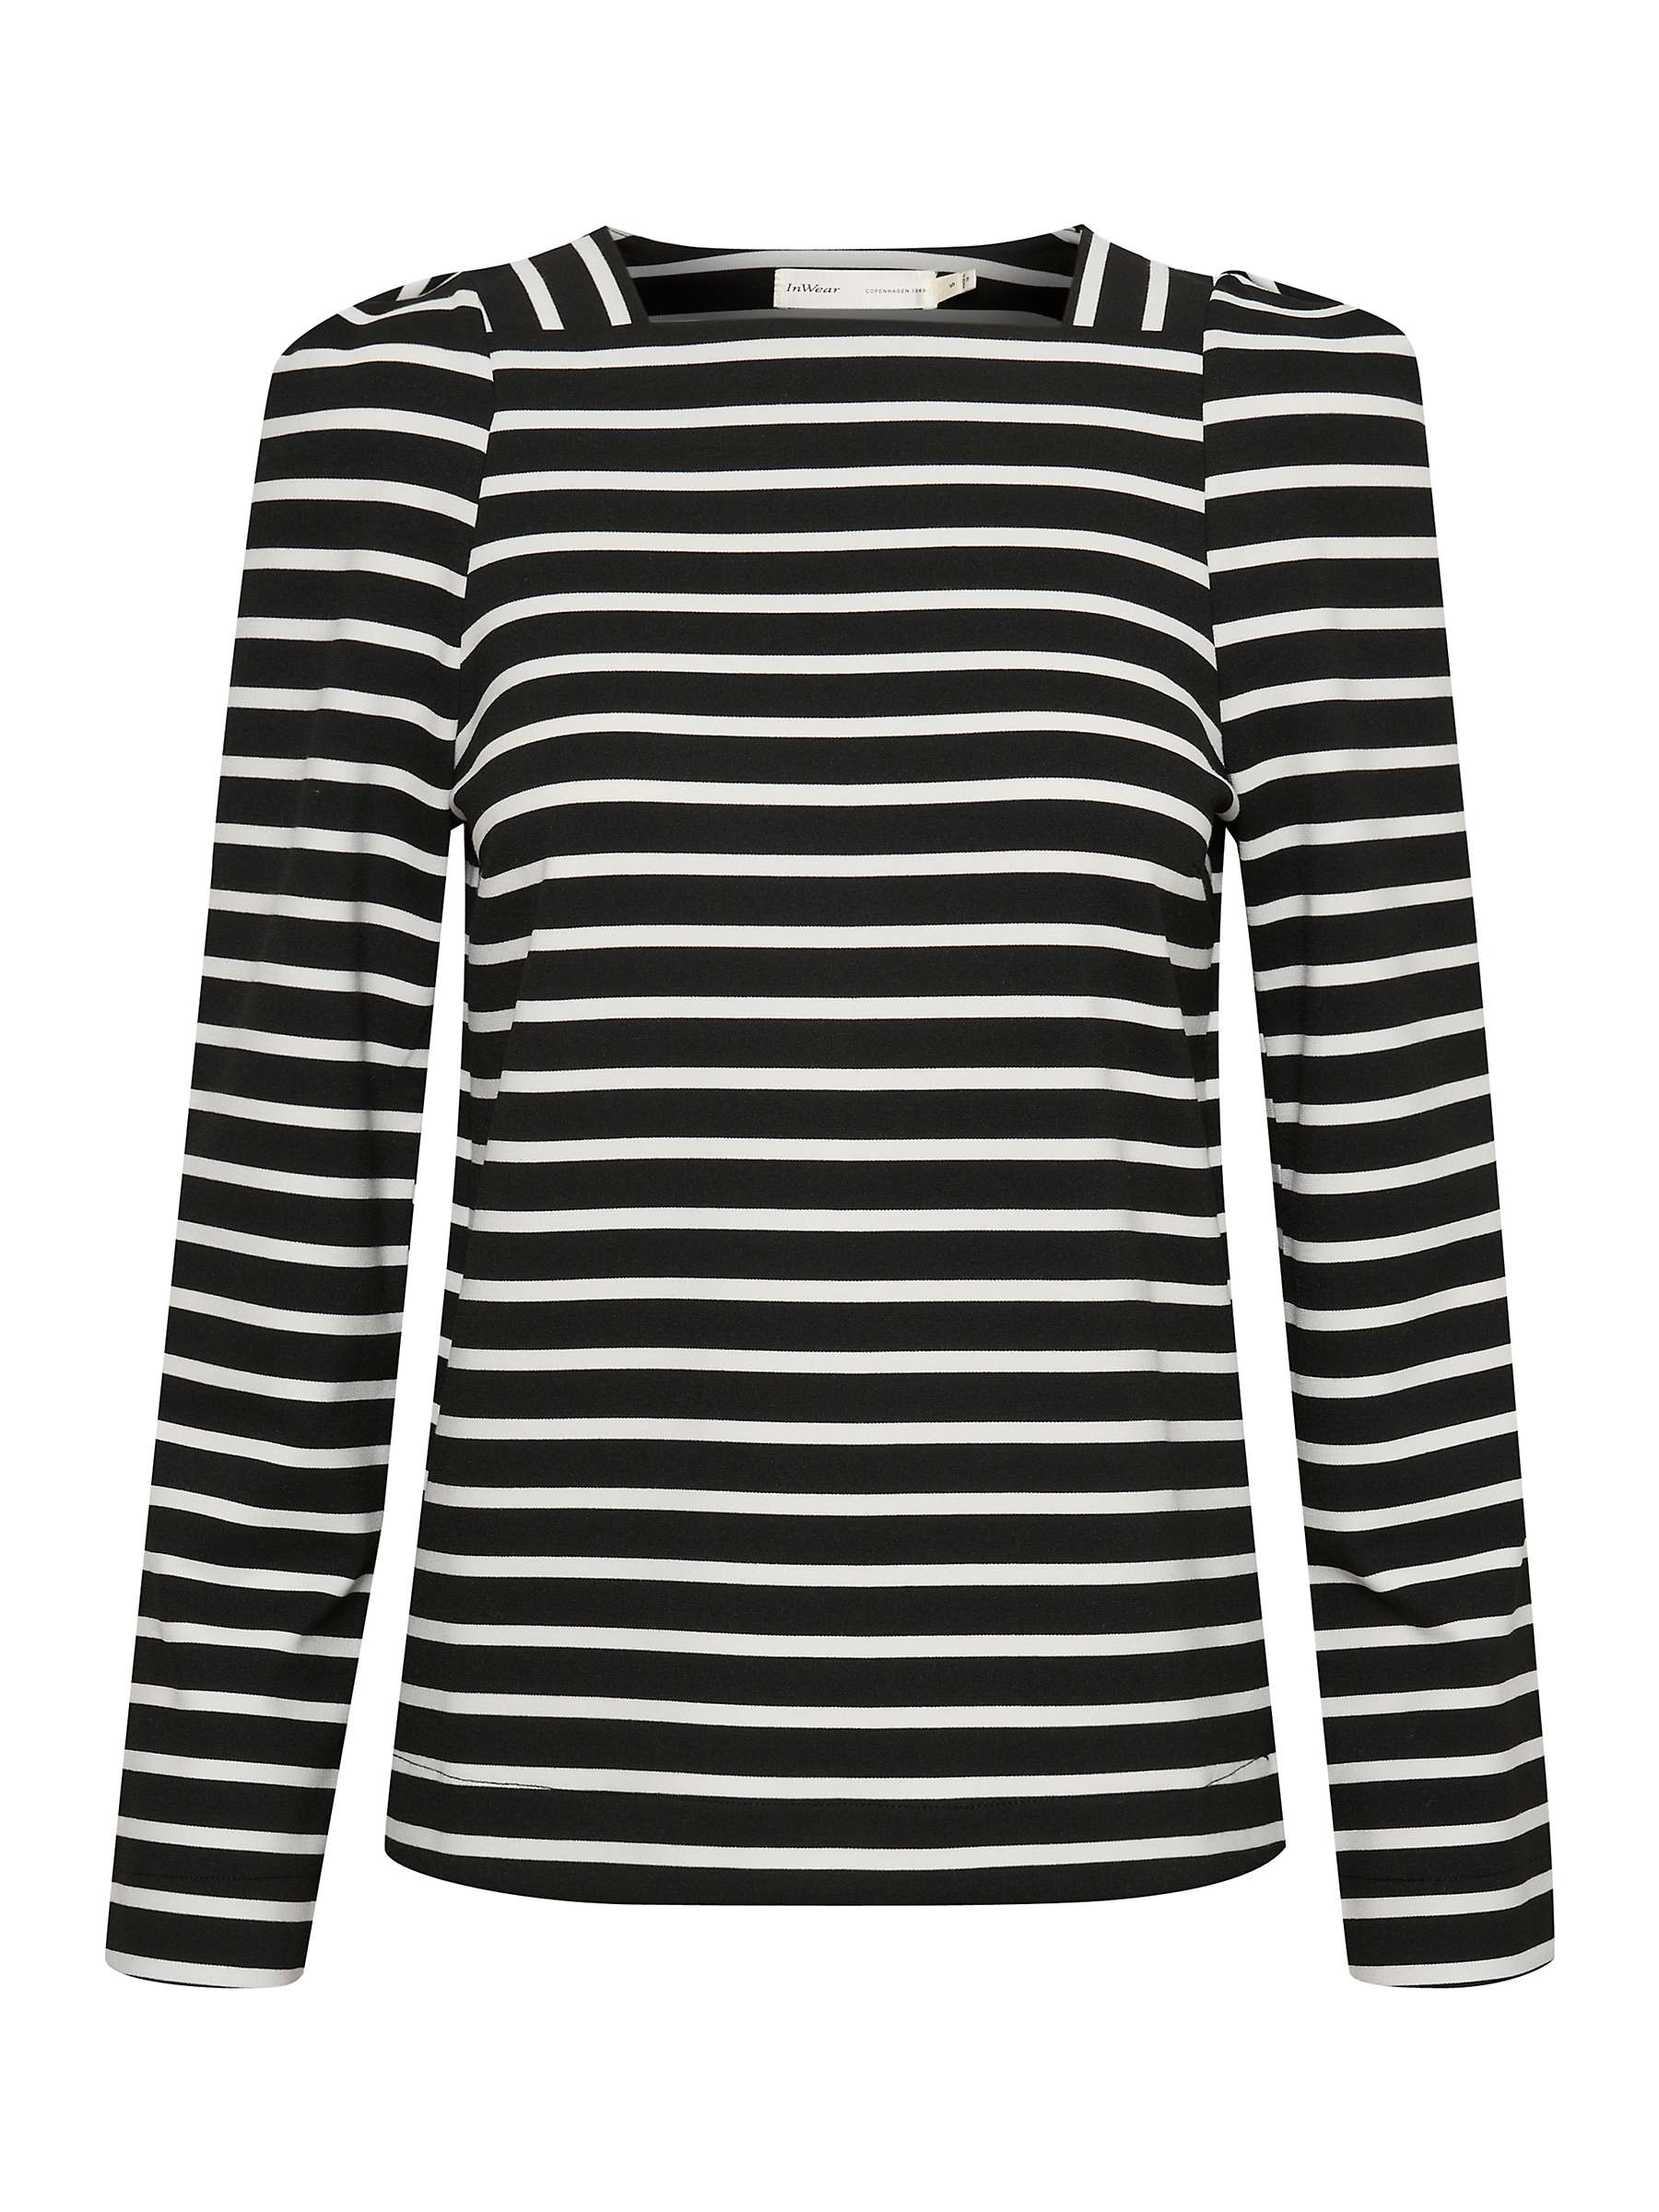 InWear Ruby Stripe Top, Black/White at John Lewis & Partners